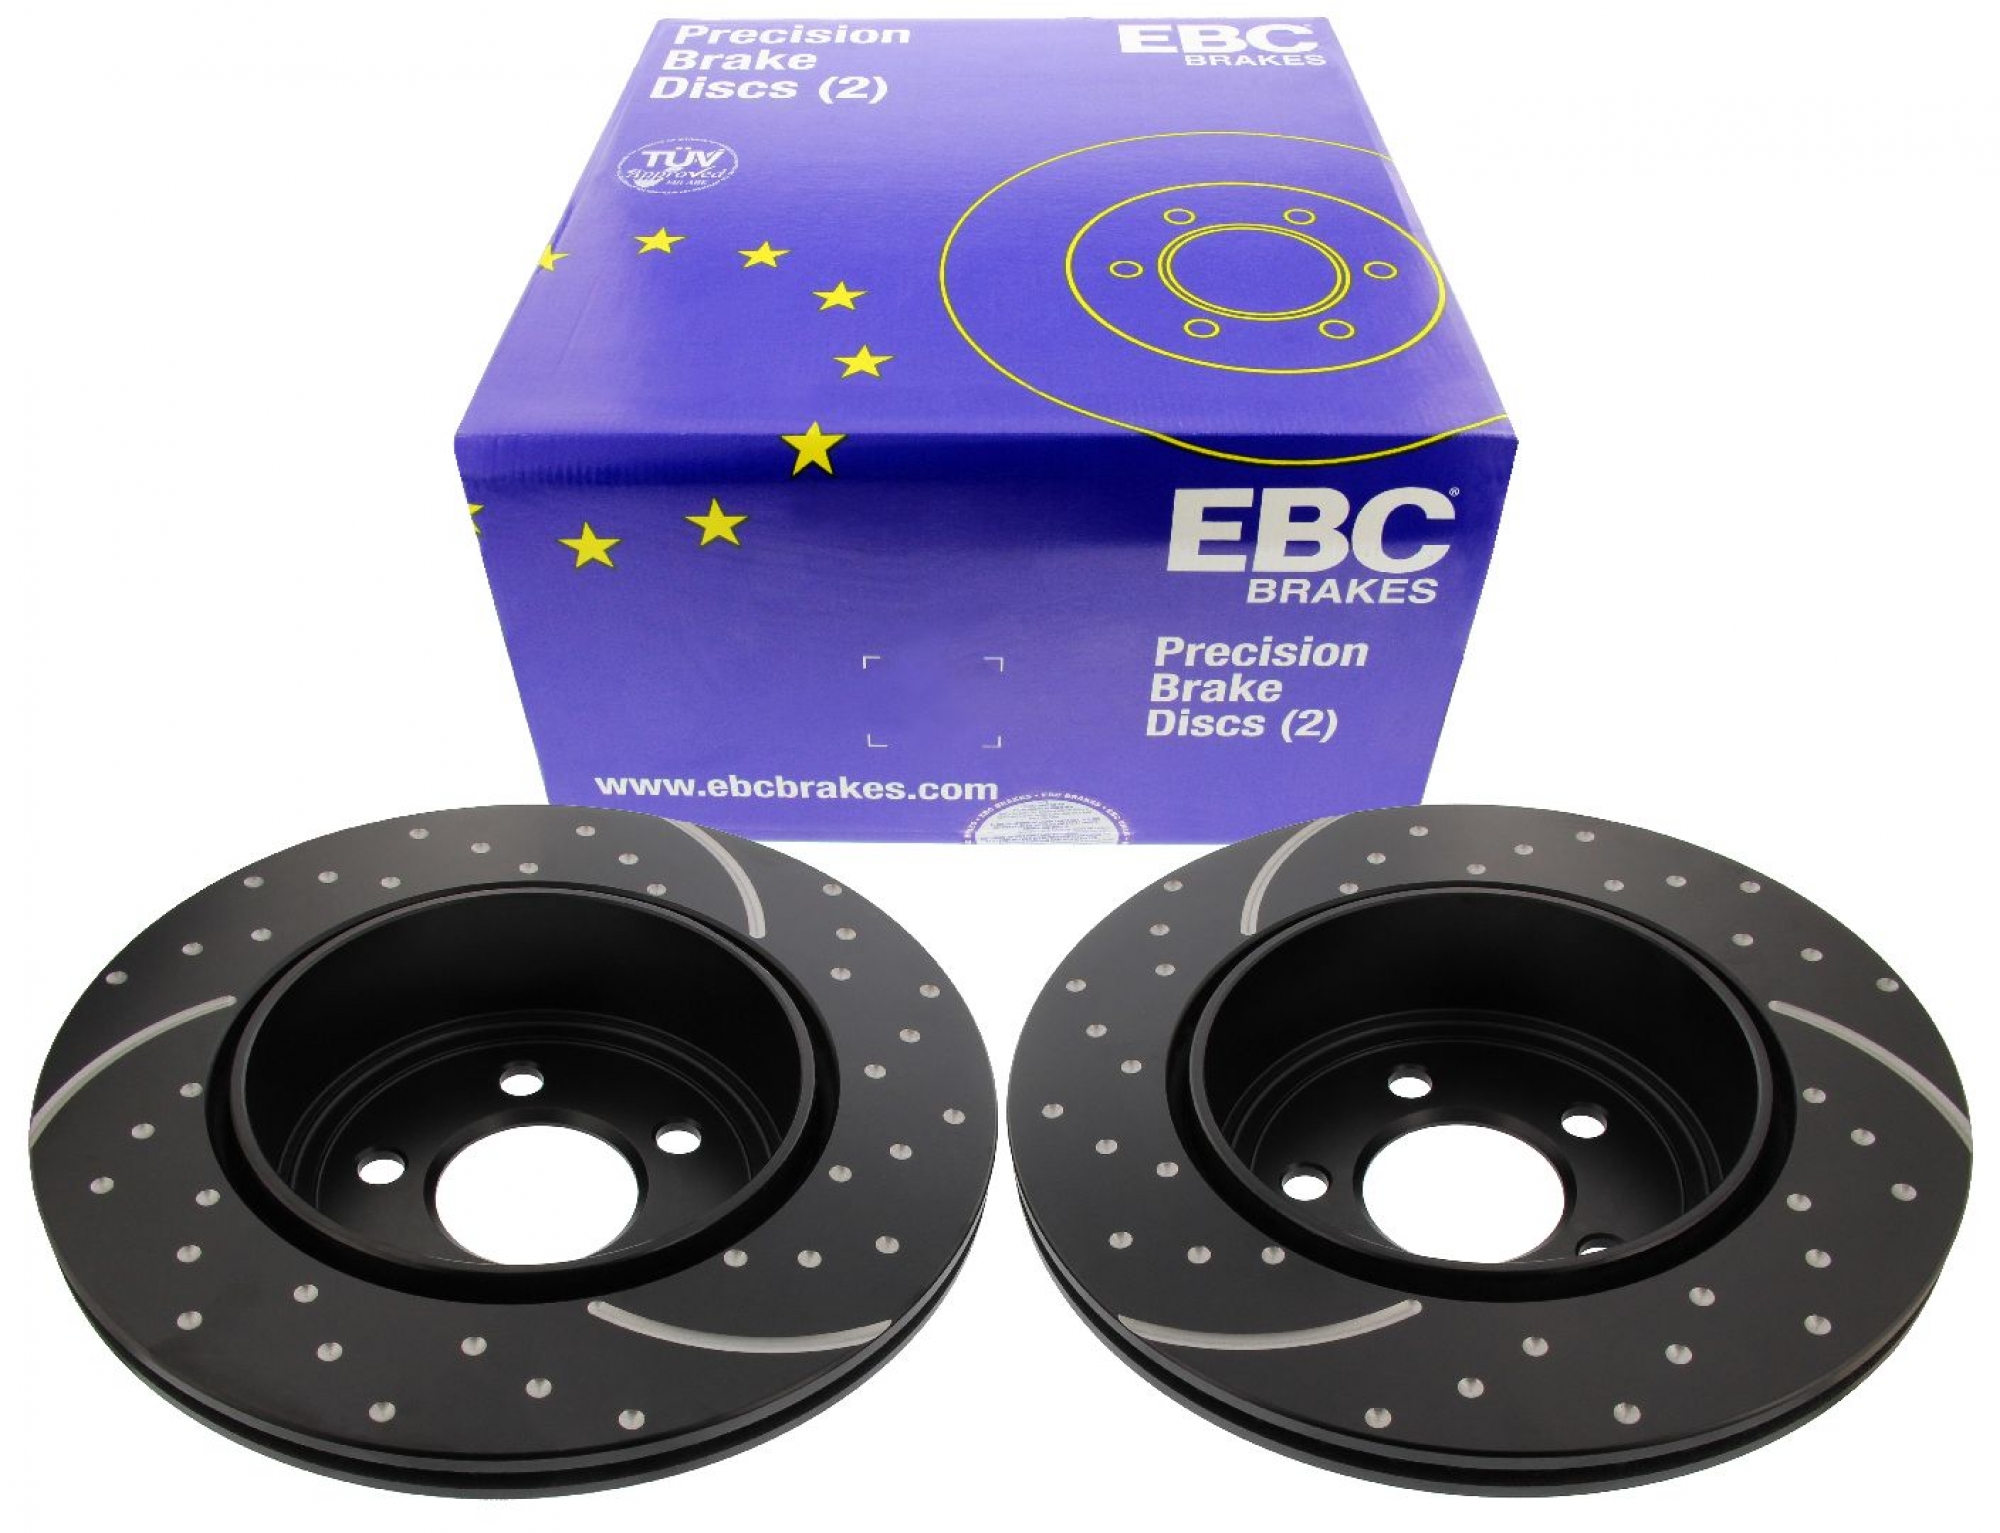 EBC-Bremsscheiben, Turbo Groove Disc Black (2-teilig), HA, Chrysler